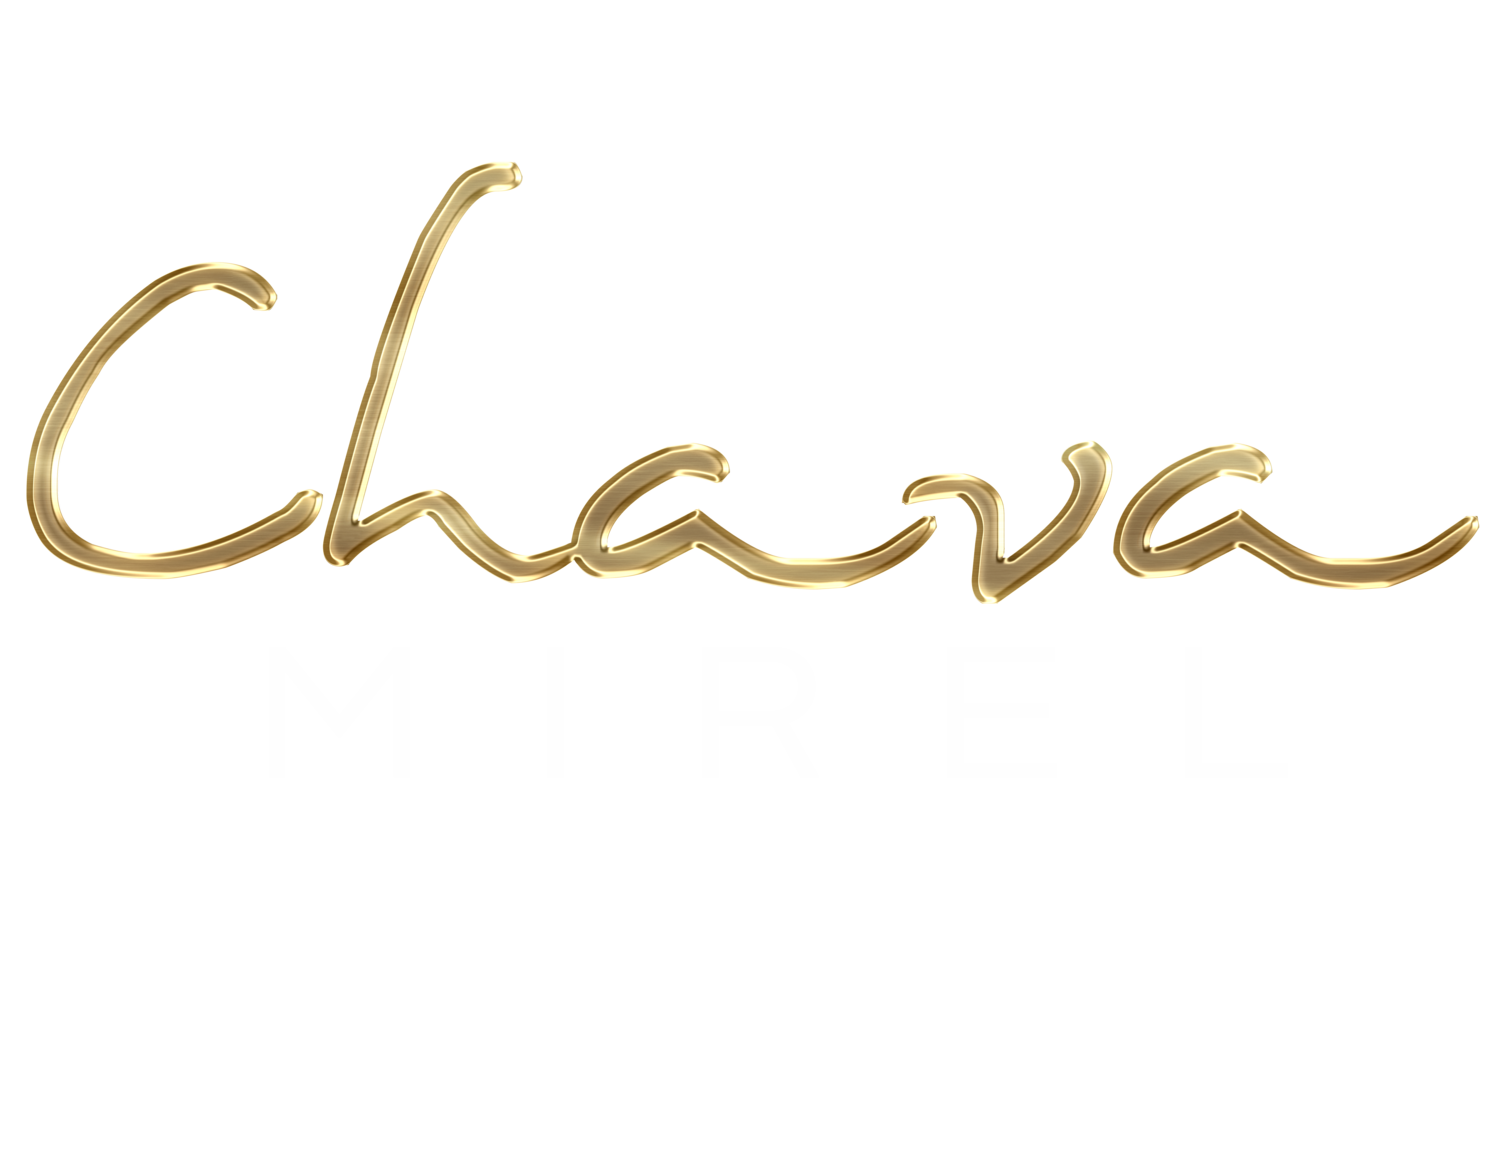 Chava Mirel